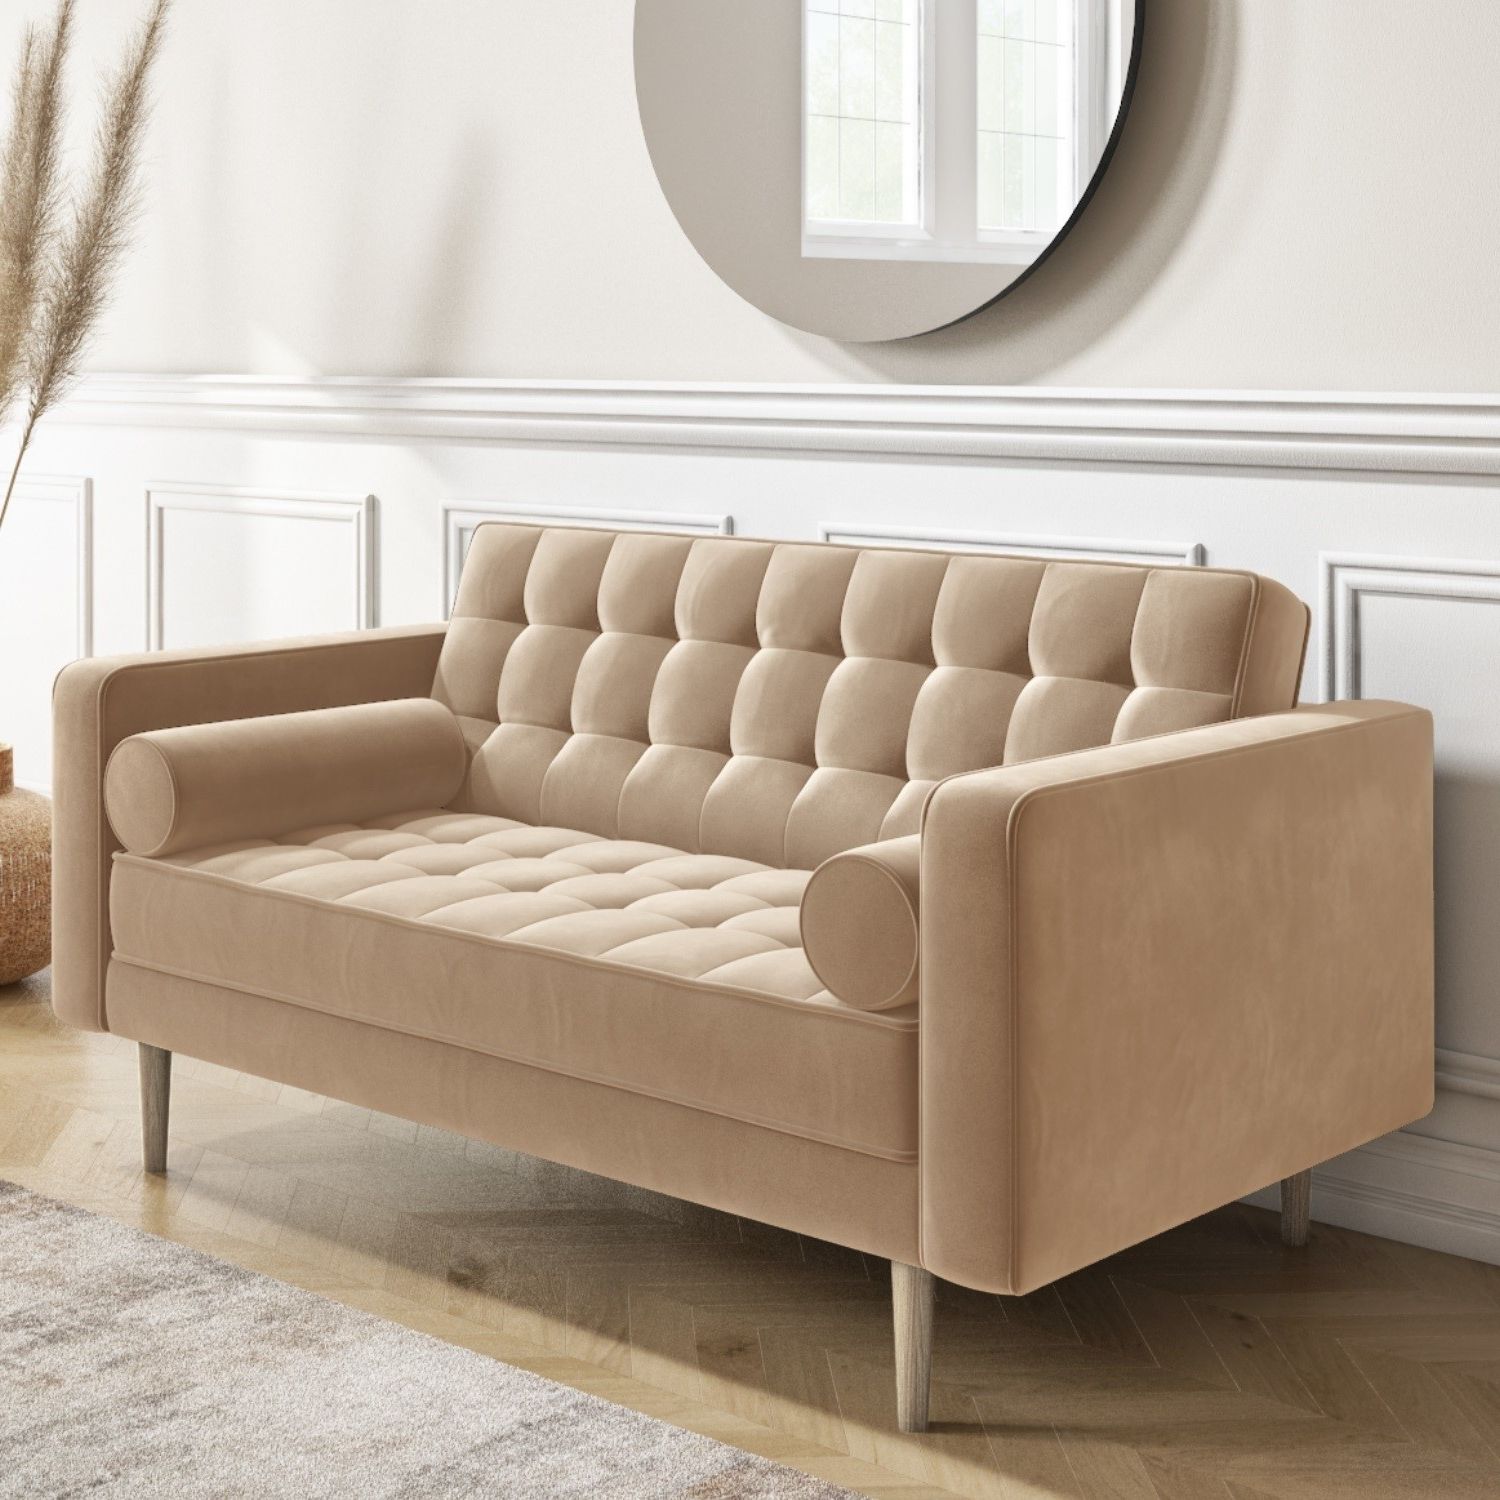 Beige Velvet 2 Seater Quilted Mid Century Sofa – Elba – Furniture123 With Regard To Current Elegant Beige Velvet Sofas (View 8 of 15)